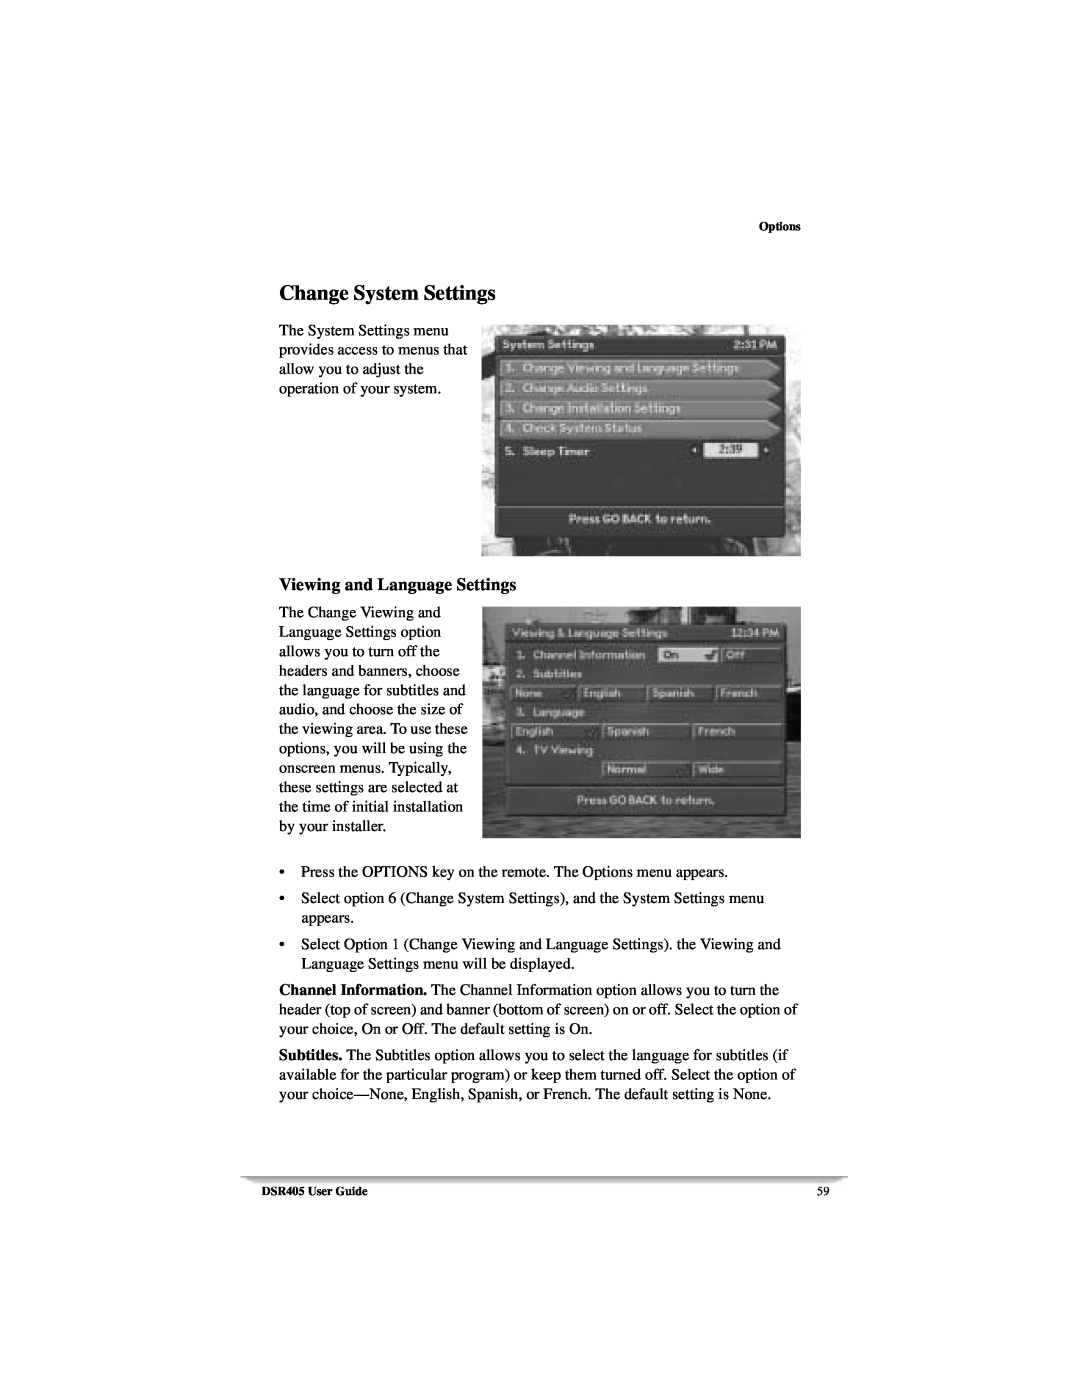 Motorola DSR405 manual Change System Settings, Viewing and Language Settings 